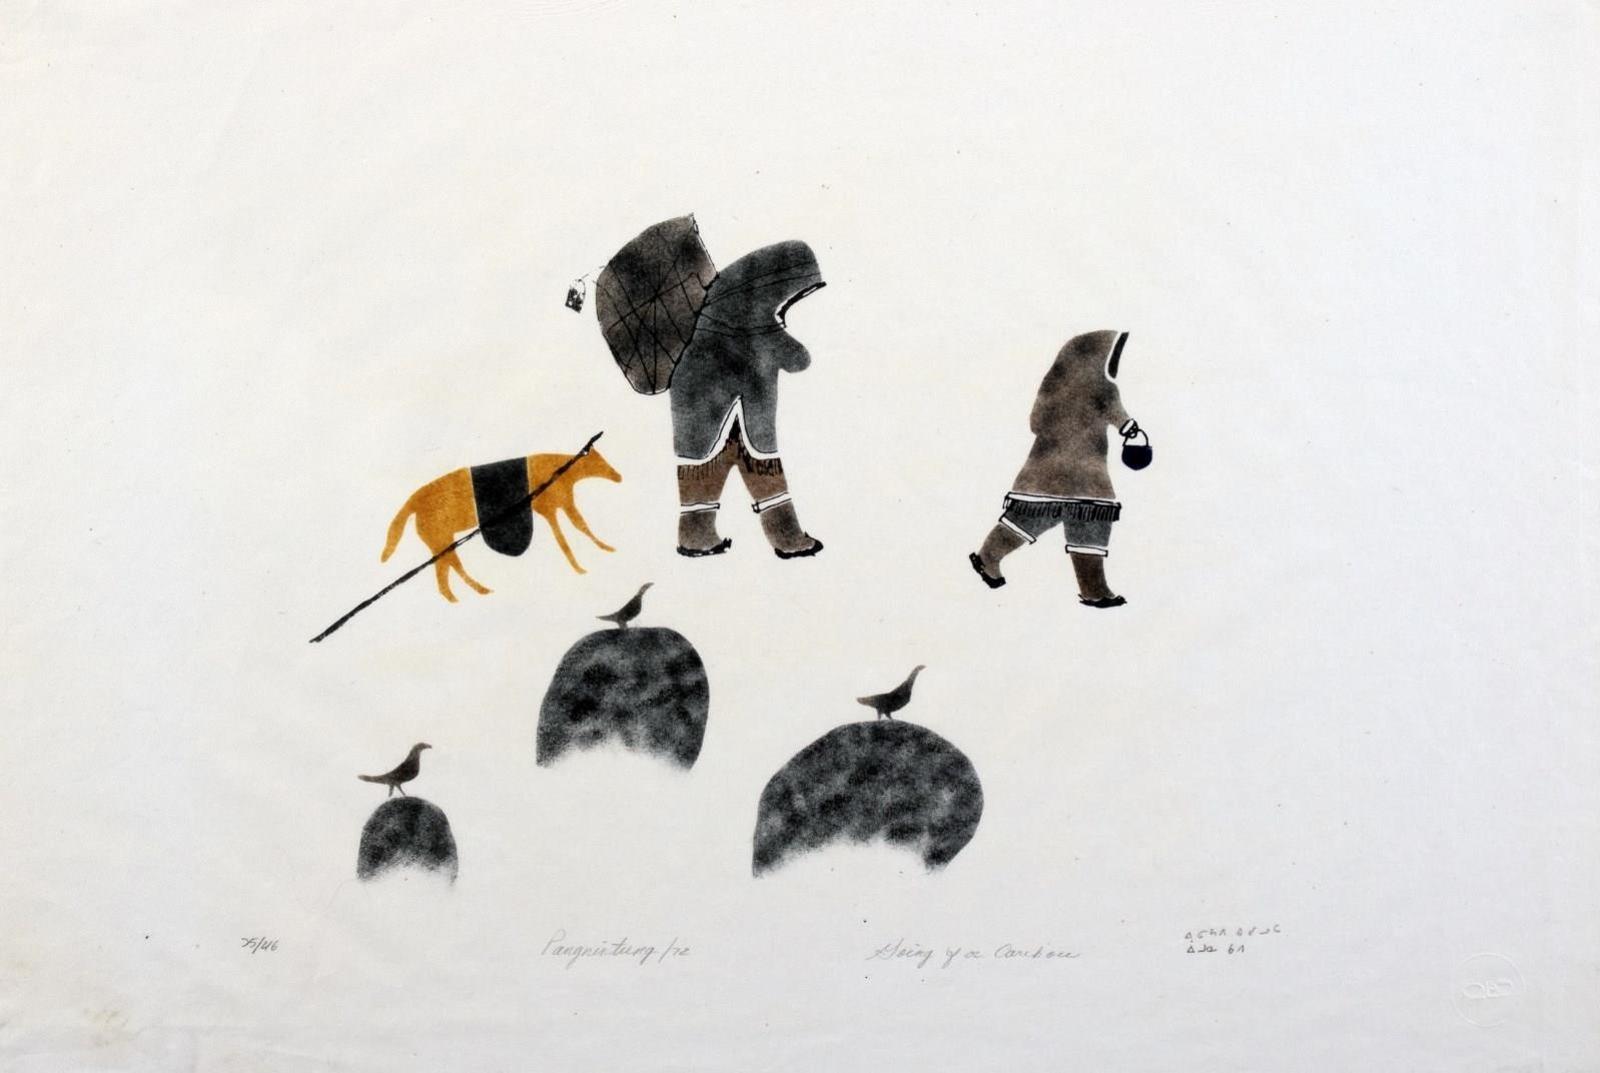 Eleesapee Ishulutaq (1925-2018) - Going For Caribou; 1972